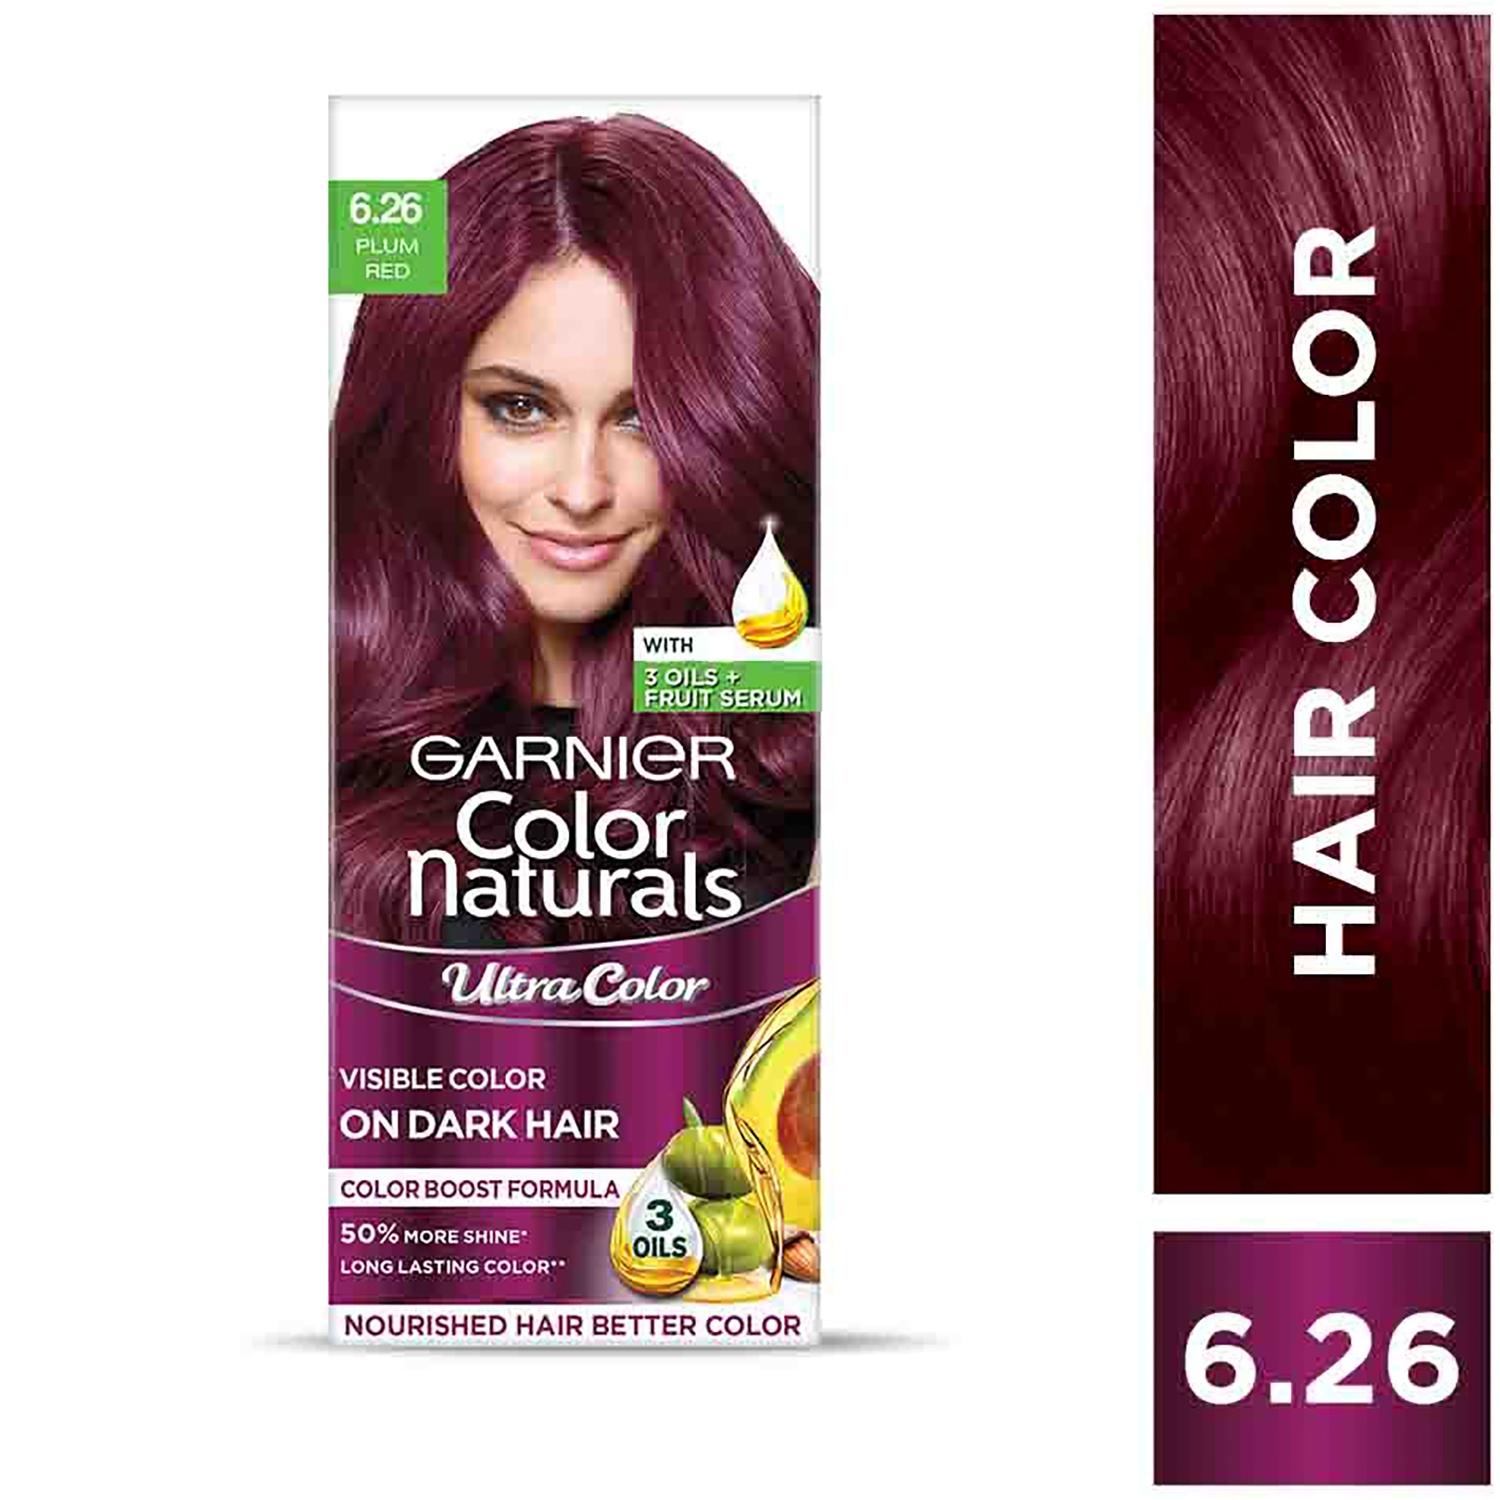 garnier color naturals creme riche hair color - shade 6.26 plum red (55ml + 50g)